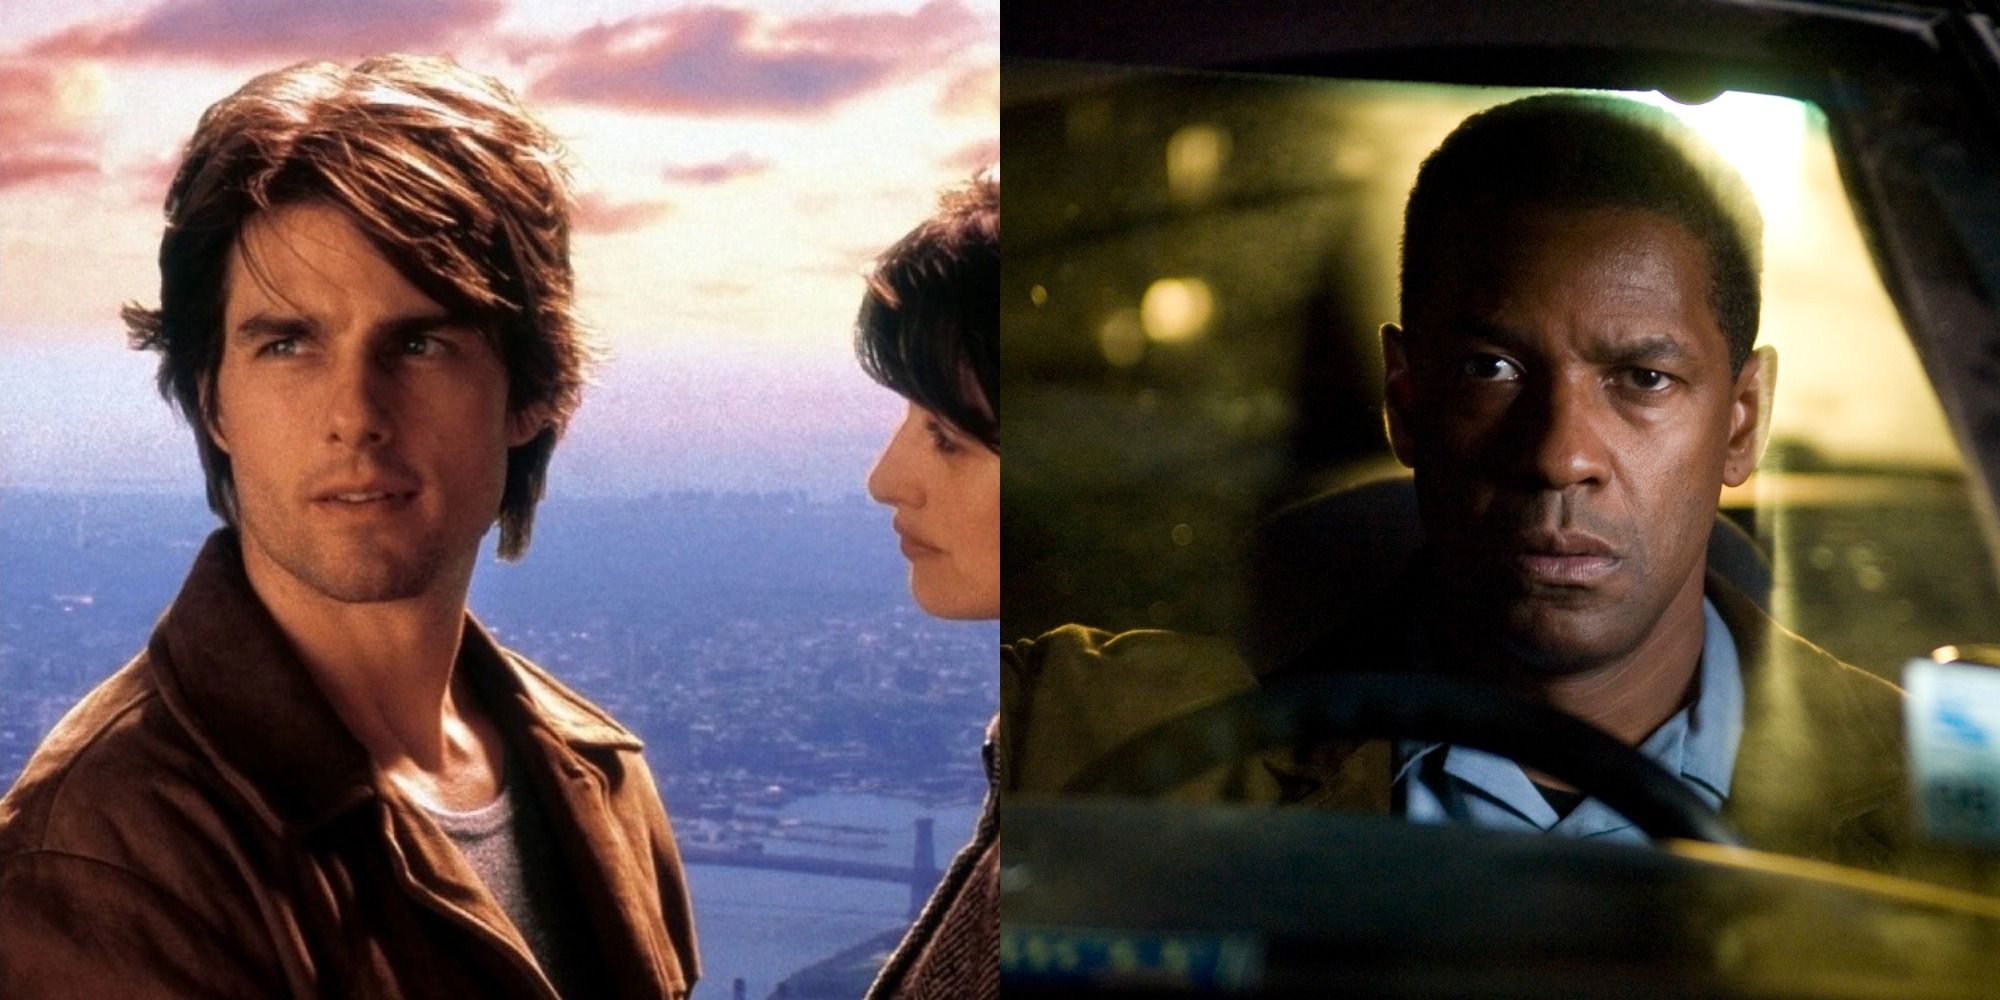 An image of Tom Cruise in Vanilla Sky and Denzel Washington in Deja Vu